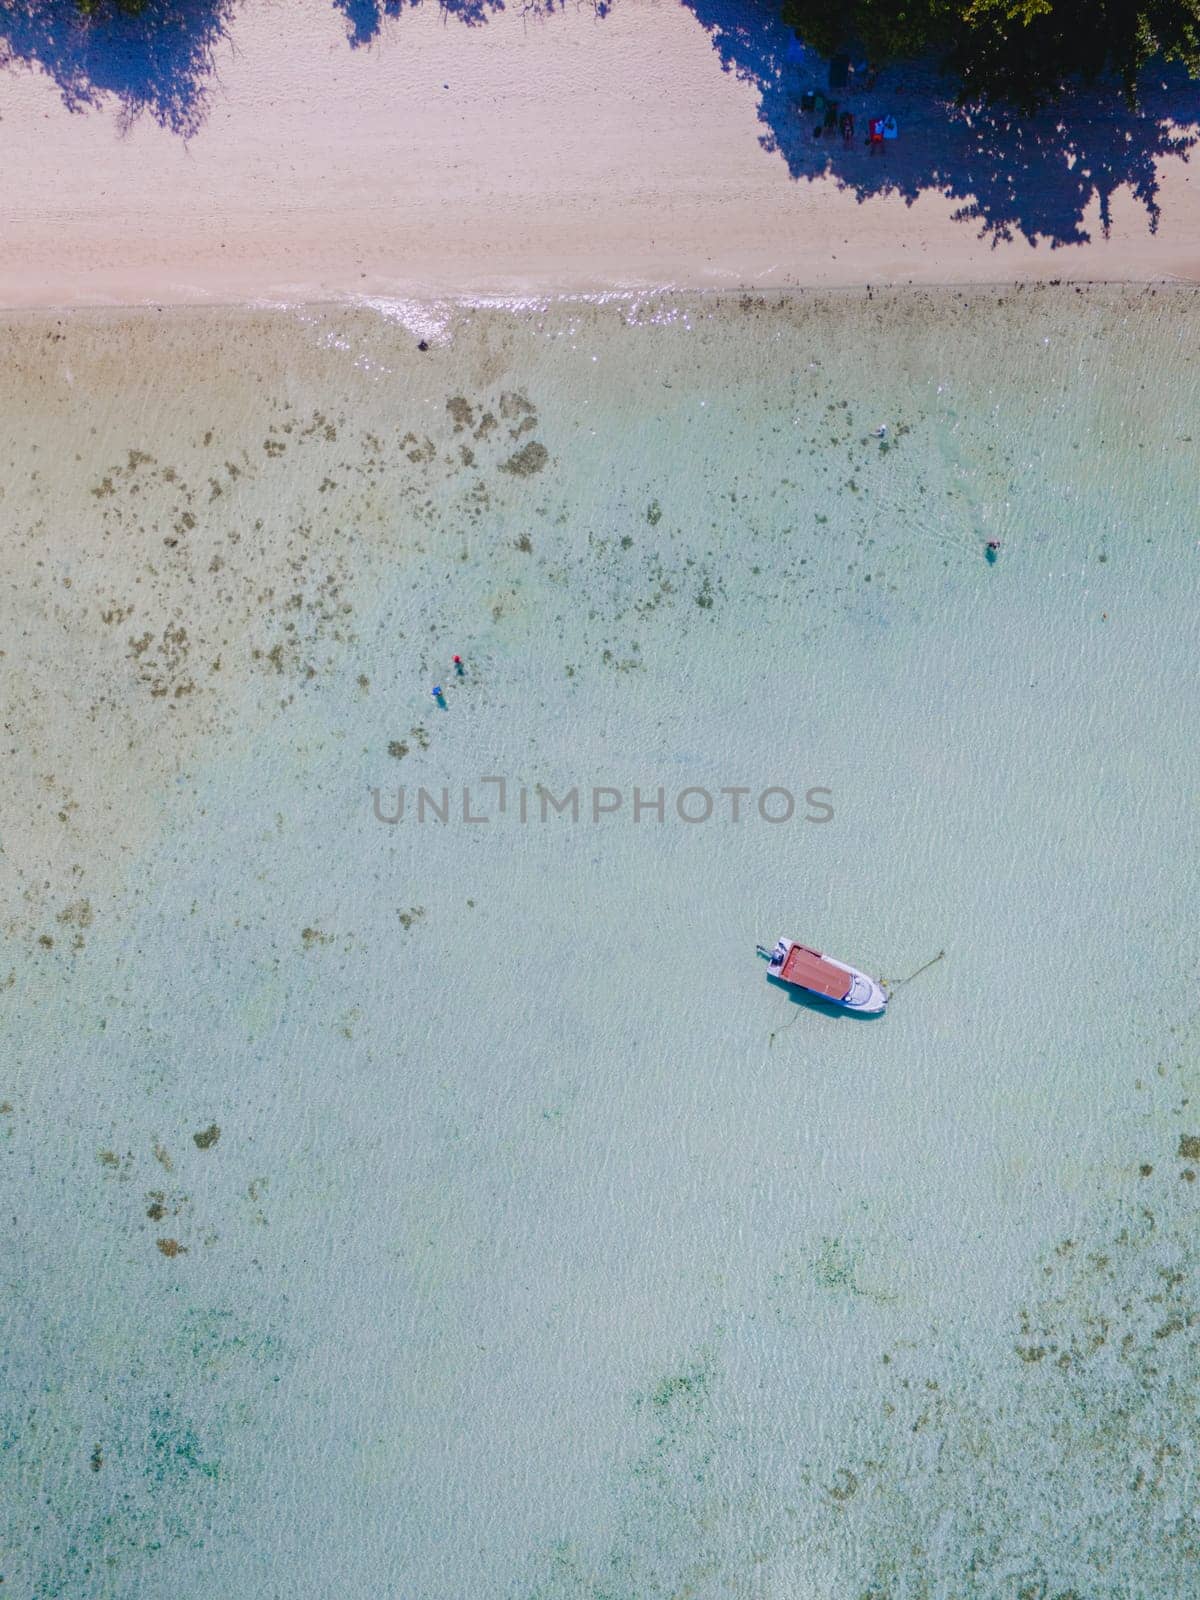 Koh Kradan tropical Island in the Andaman Sea Trang in Thailand by fokkebok